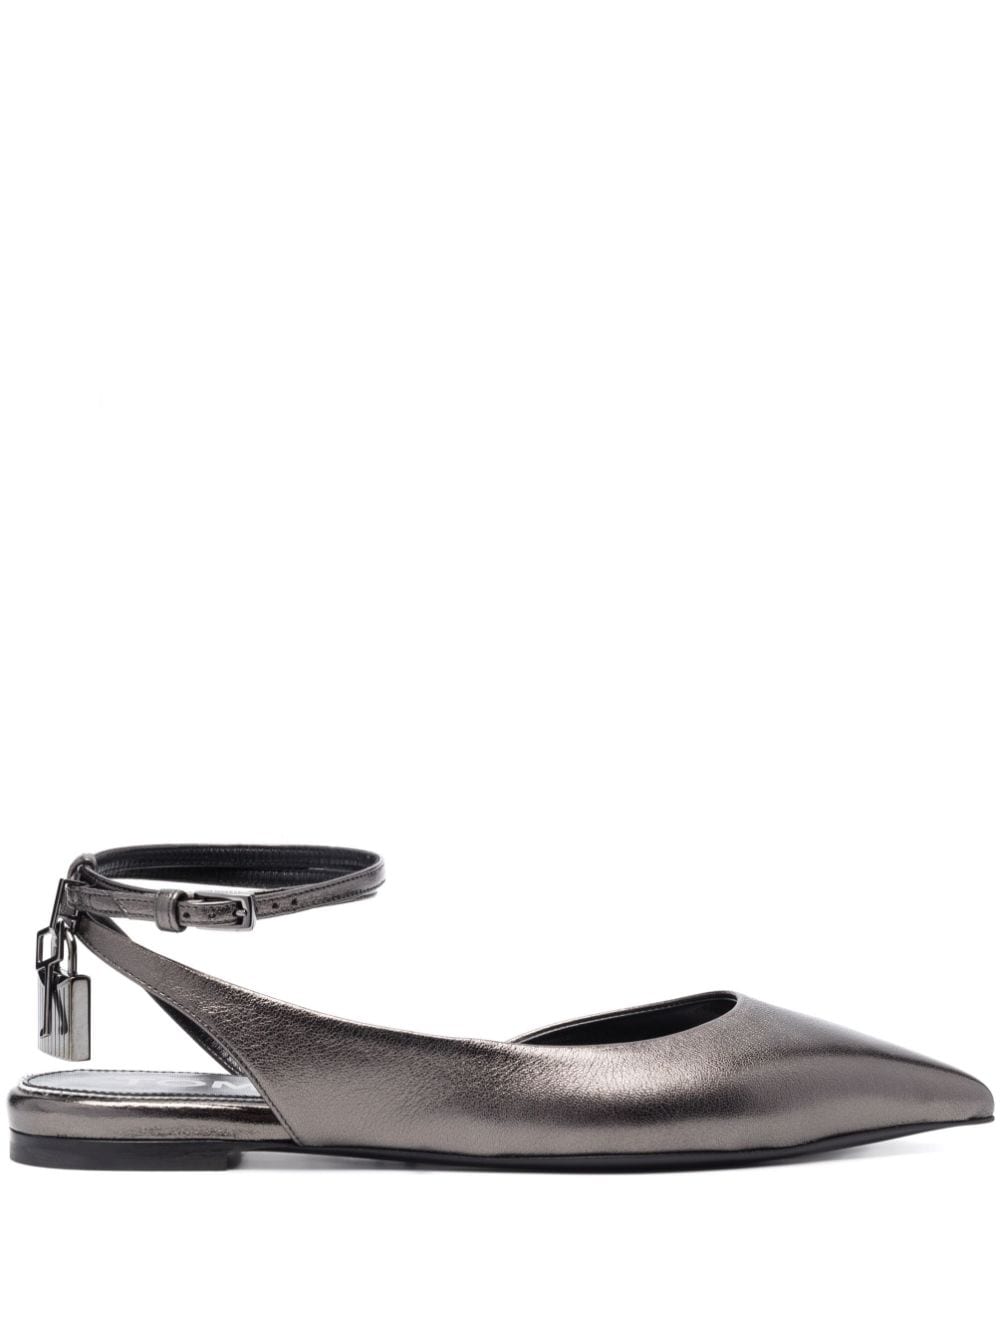 TOM FORD Padlock metallic-leather ballerina shoes - Grey von TOM FORD